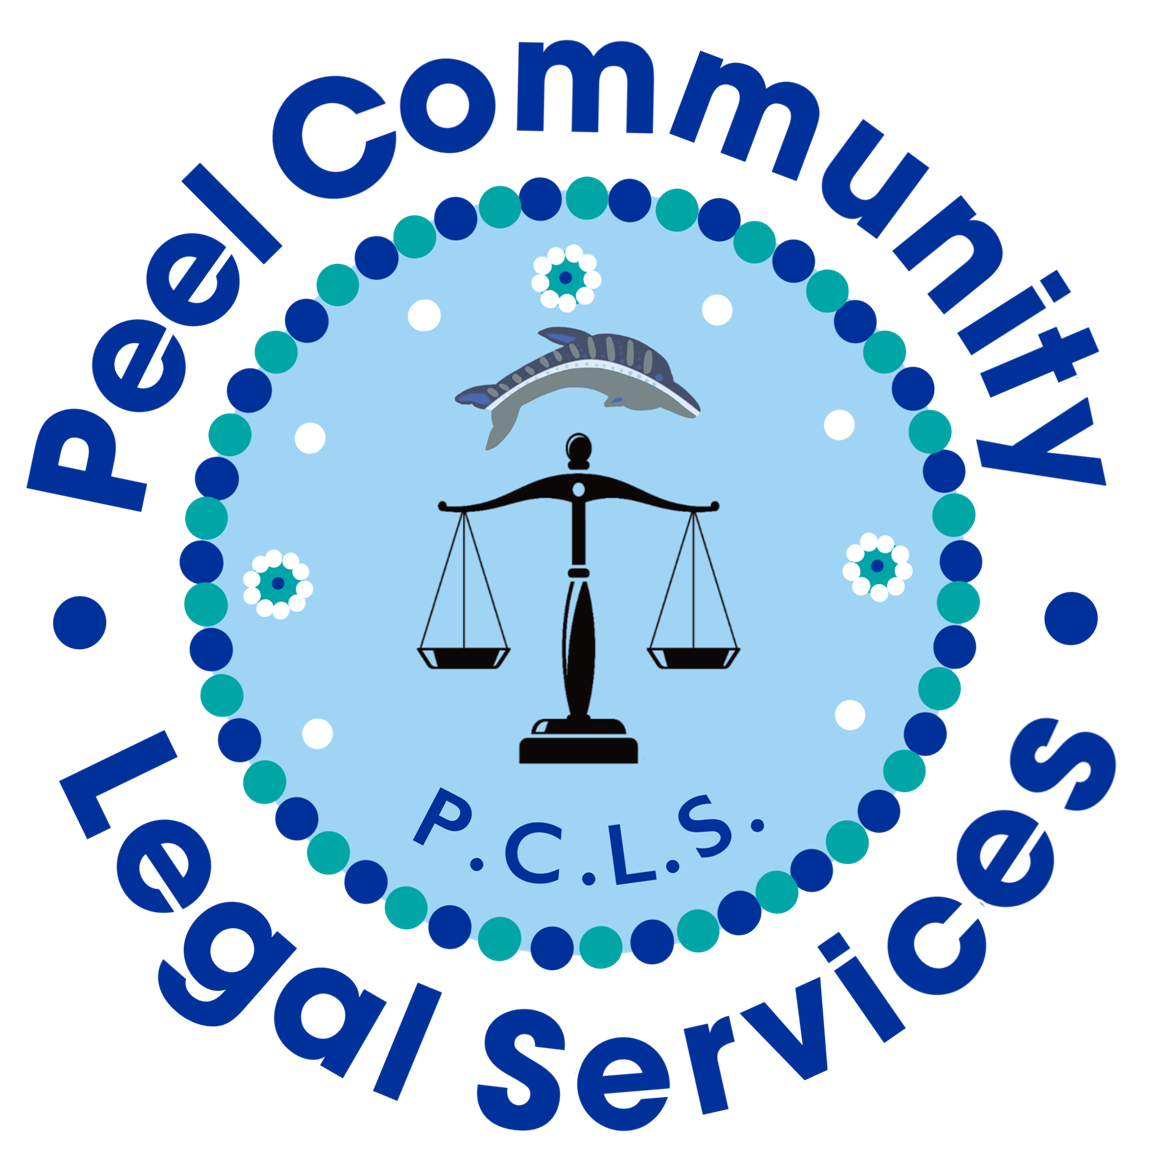 Peel Community legal services